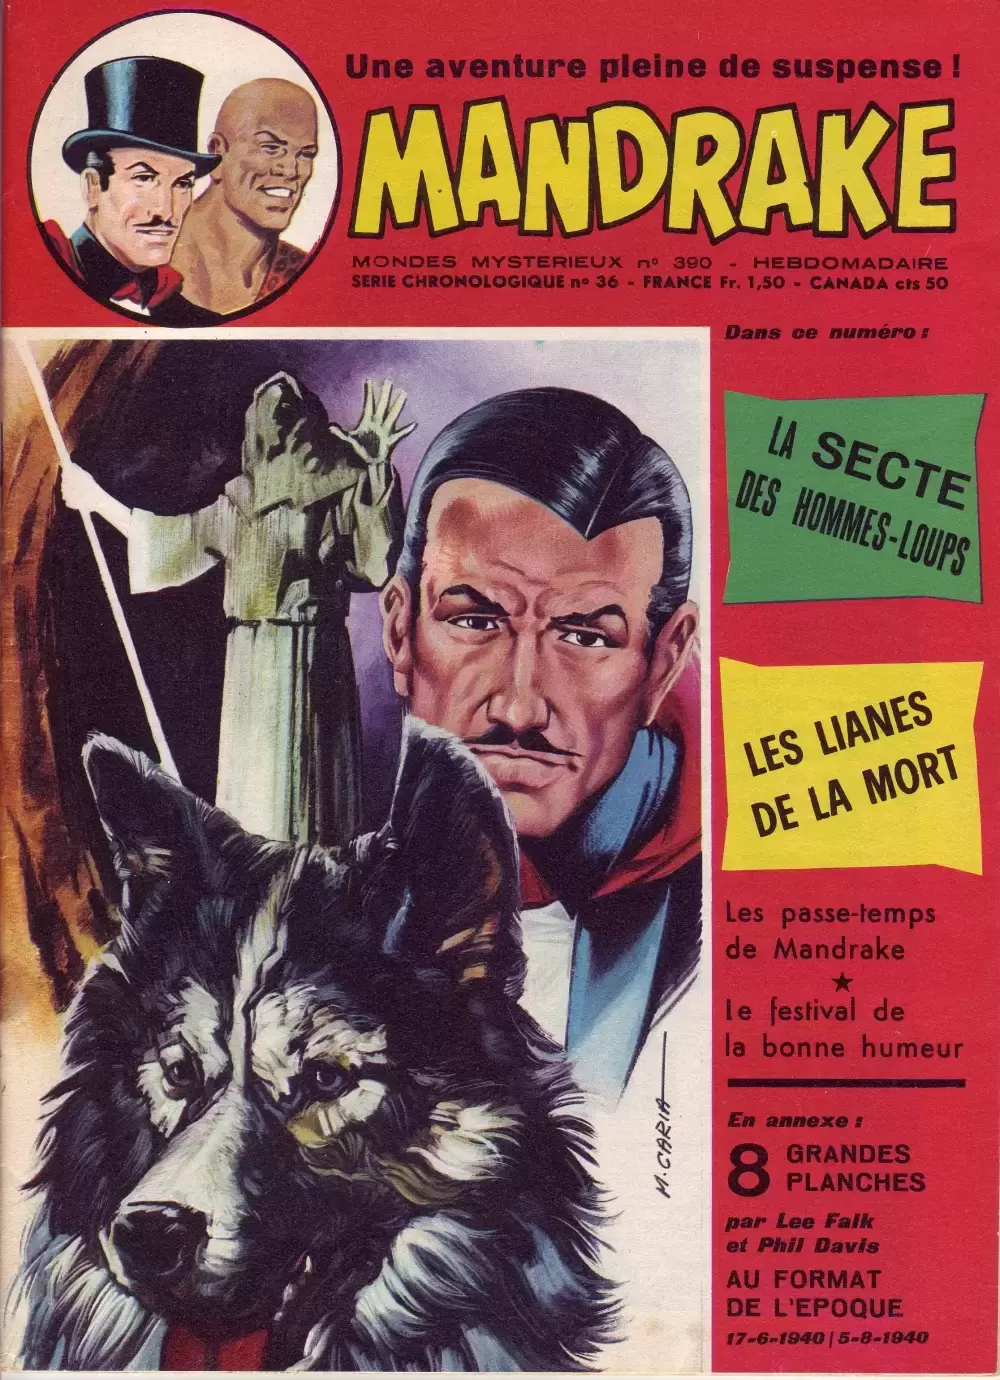 Mandrake - La secte des hommes-loups